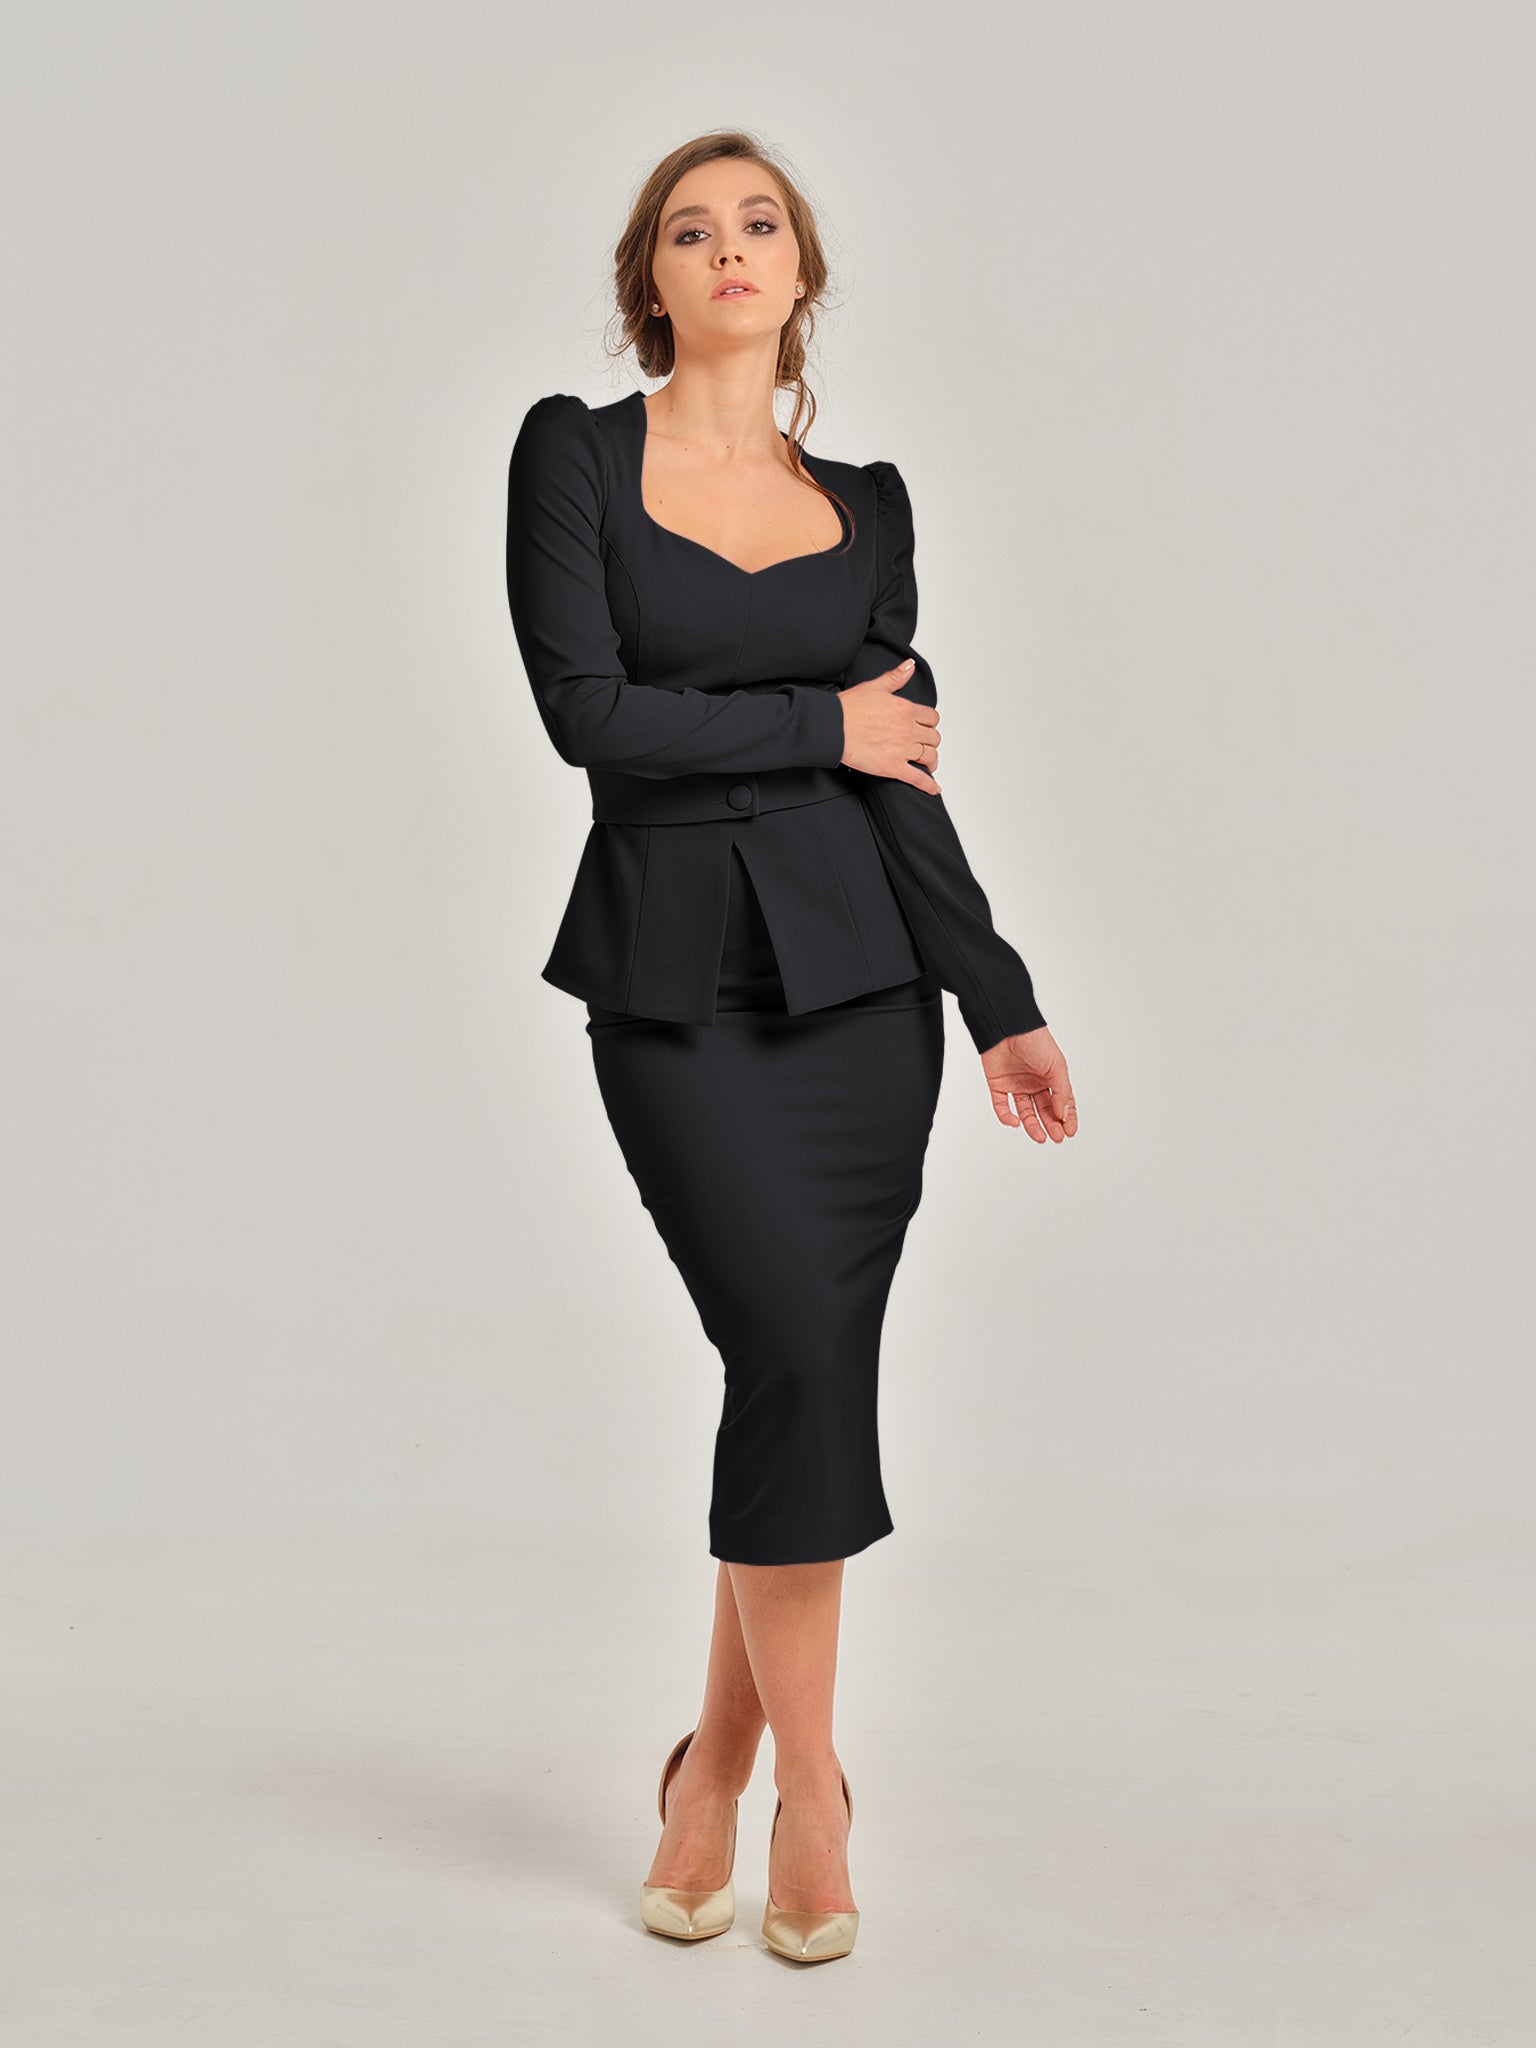 Magnetic Power High-Waist Pencil Midi Skirt by Tia Dorraine Women's Luxury Fashion Designer Clothing Brand